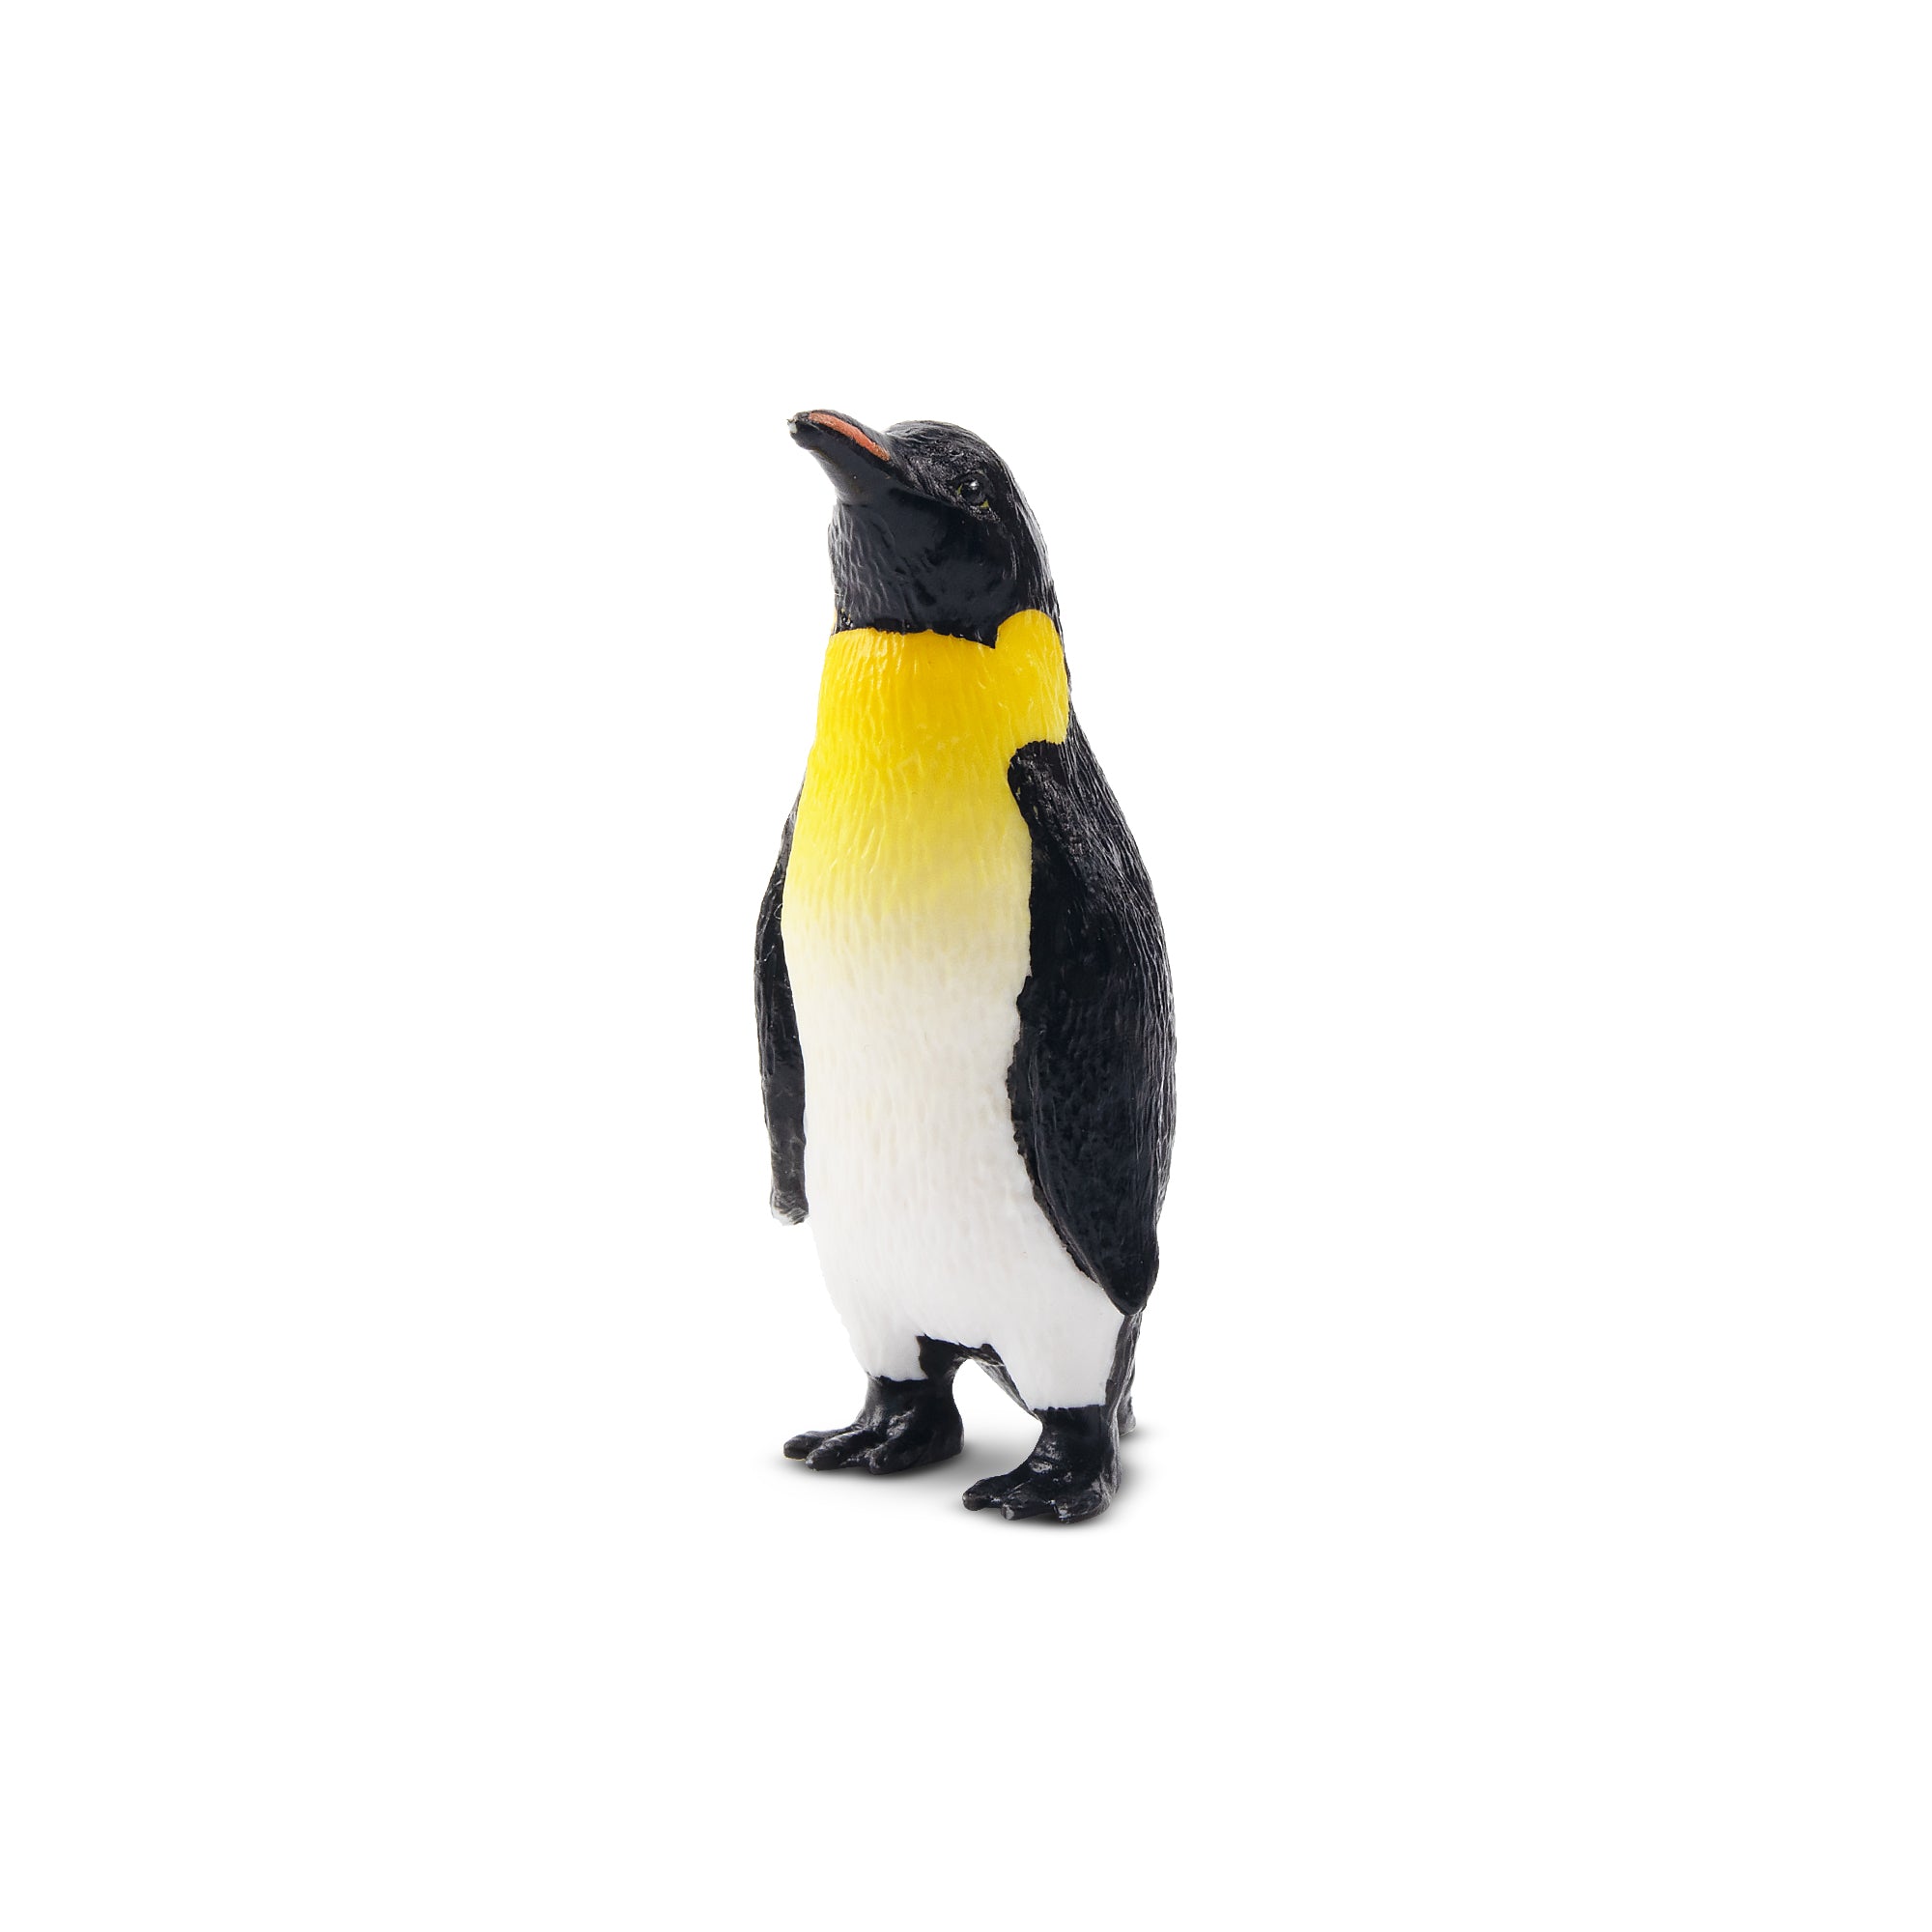 Toymany Standing Penguin Figurine Toy